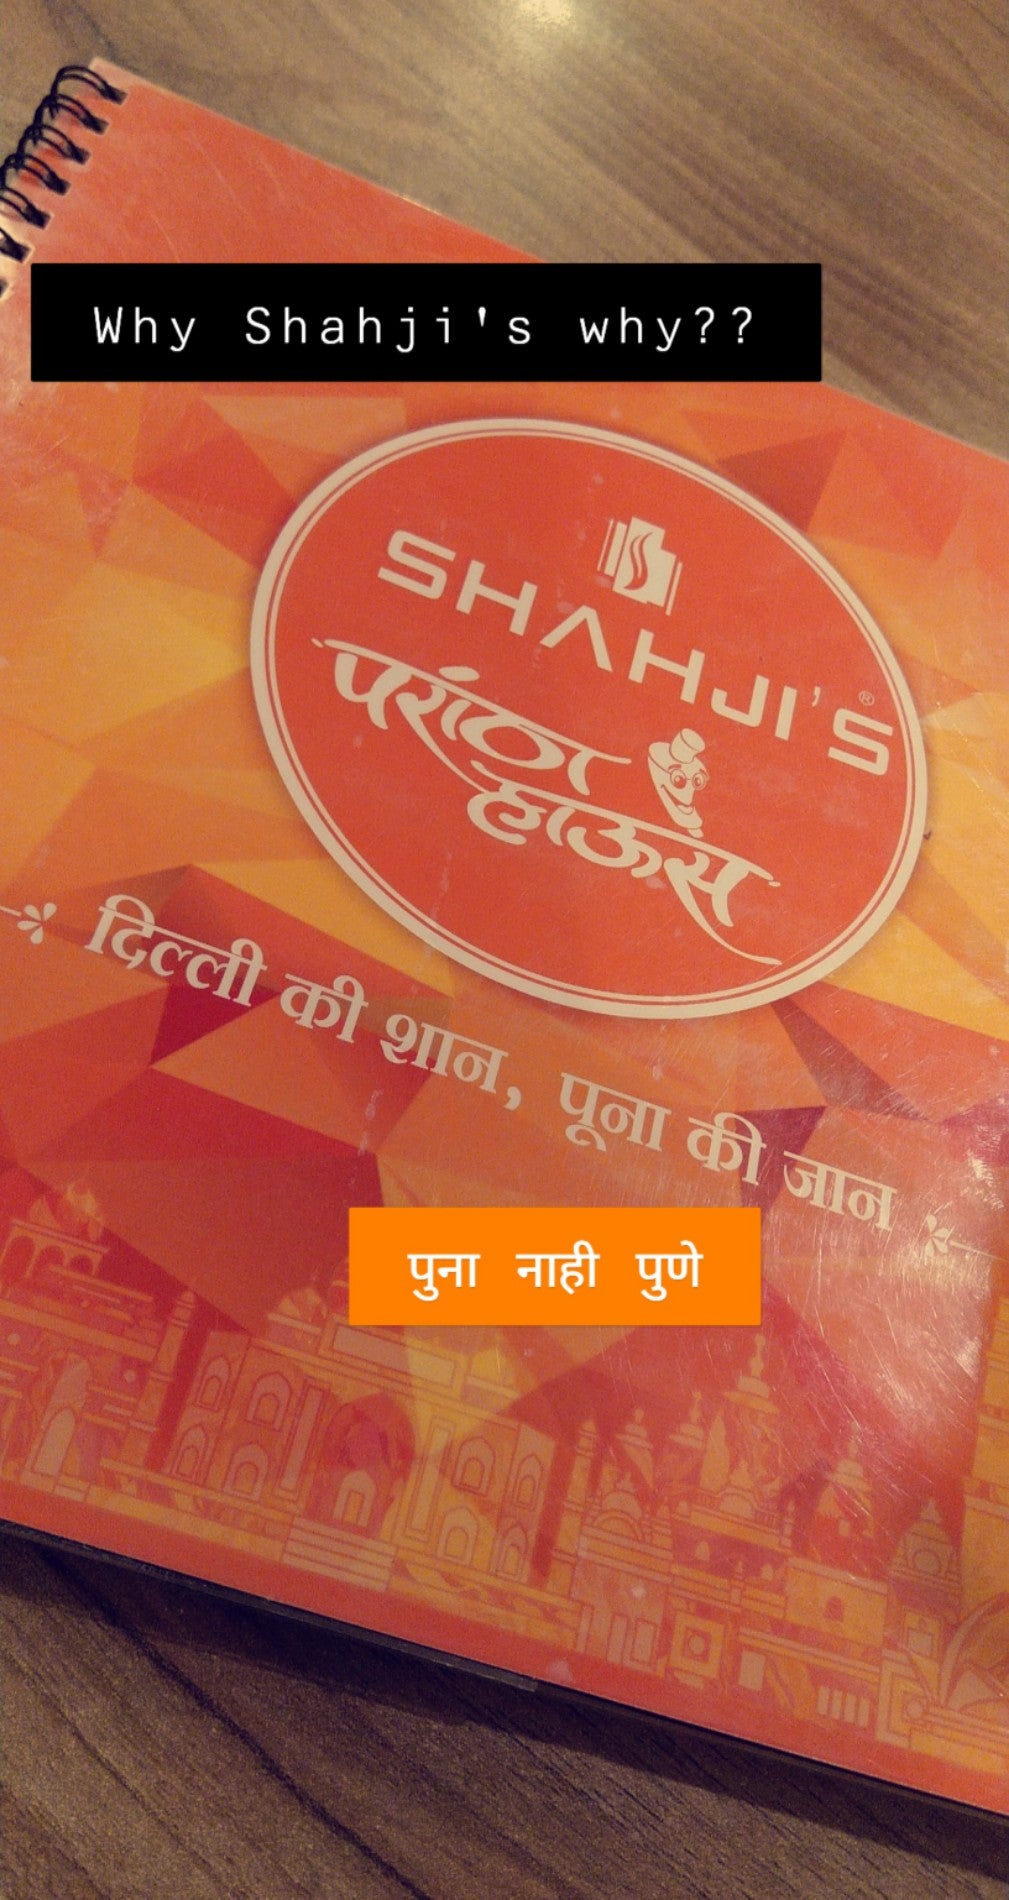 Shahji's Paratha House